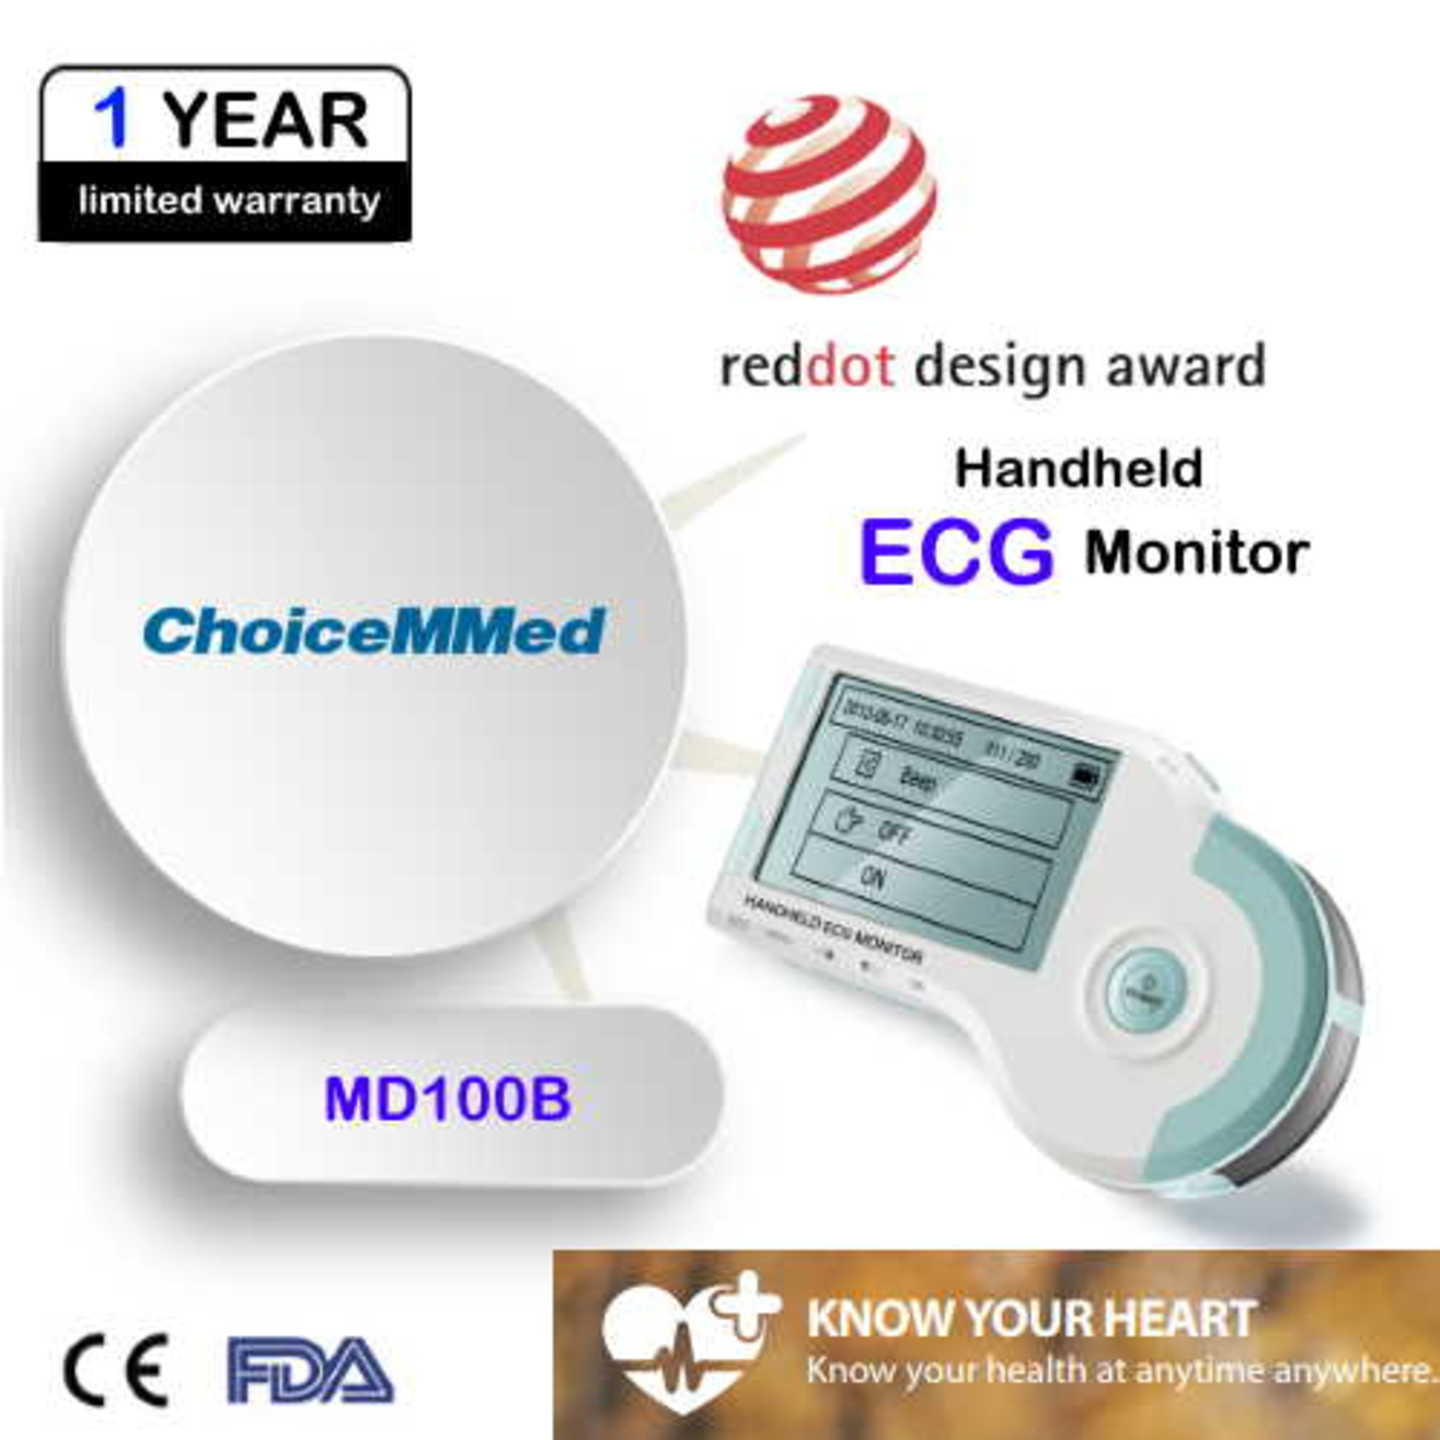 ChoiceMMed Portable Handheld ECG monitor - MD100B